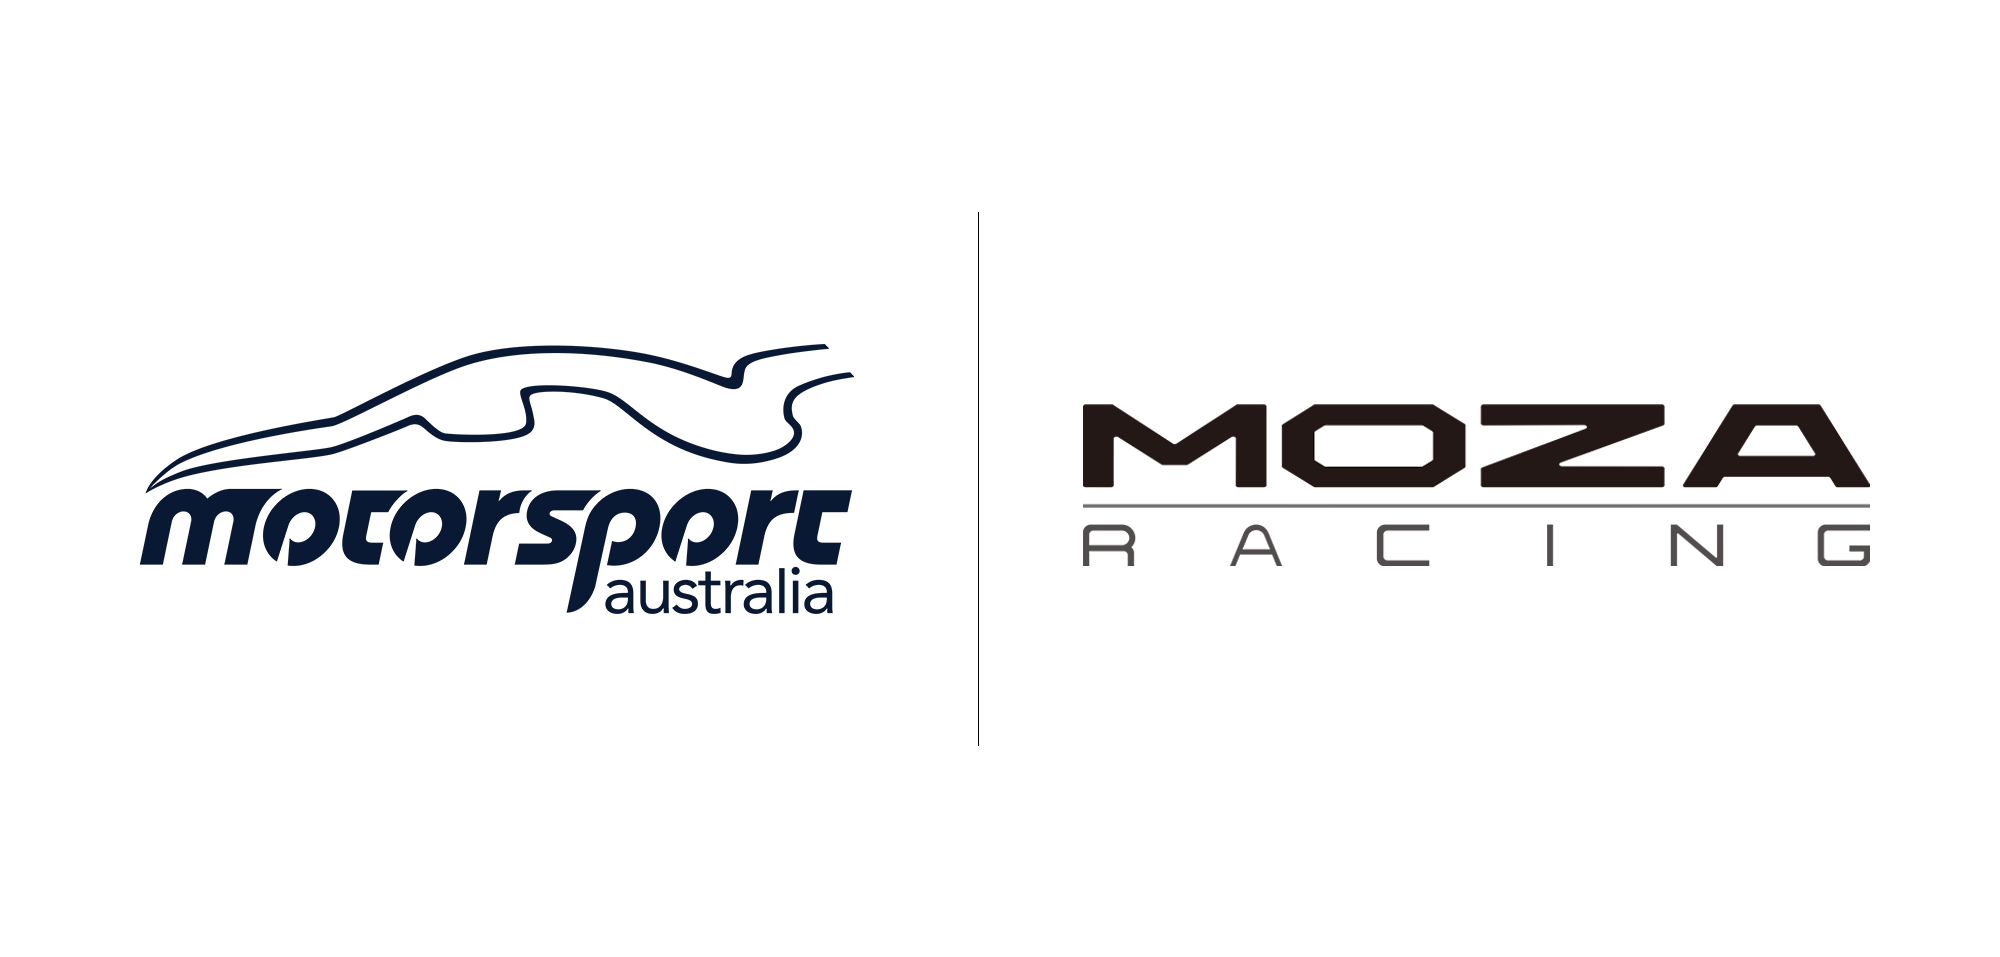 MOZA Racing gears up with Motorsport Australia